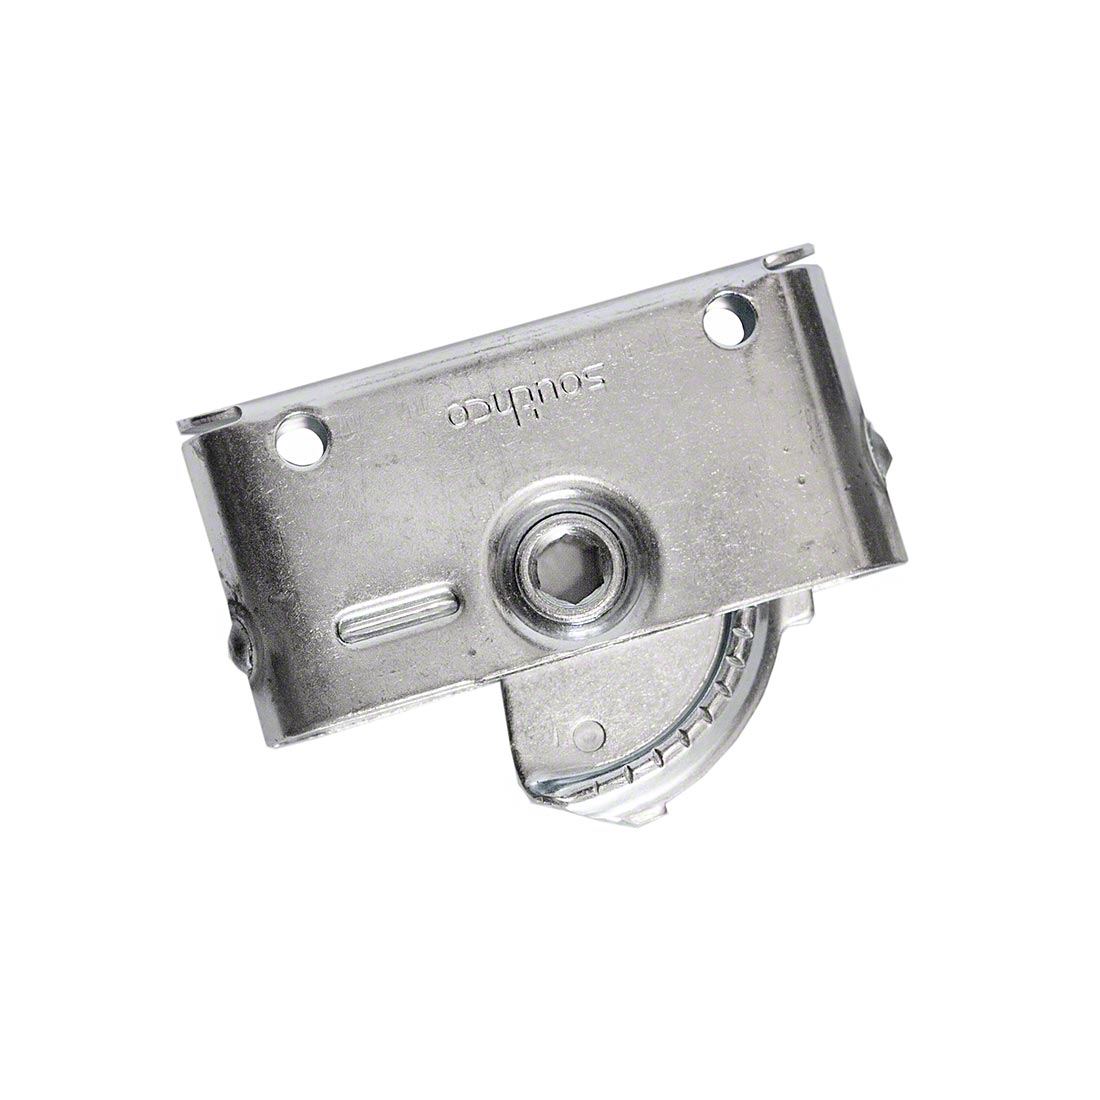 Biljax Male Roto Lock (Replacement Part for ST8100 Deck Locking Mechanism)